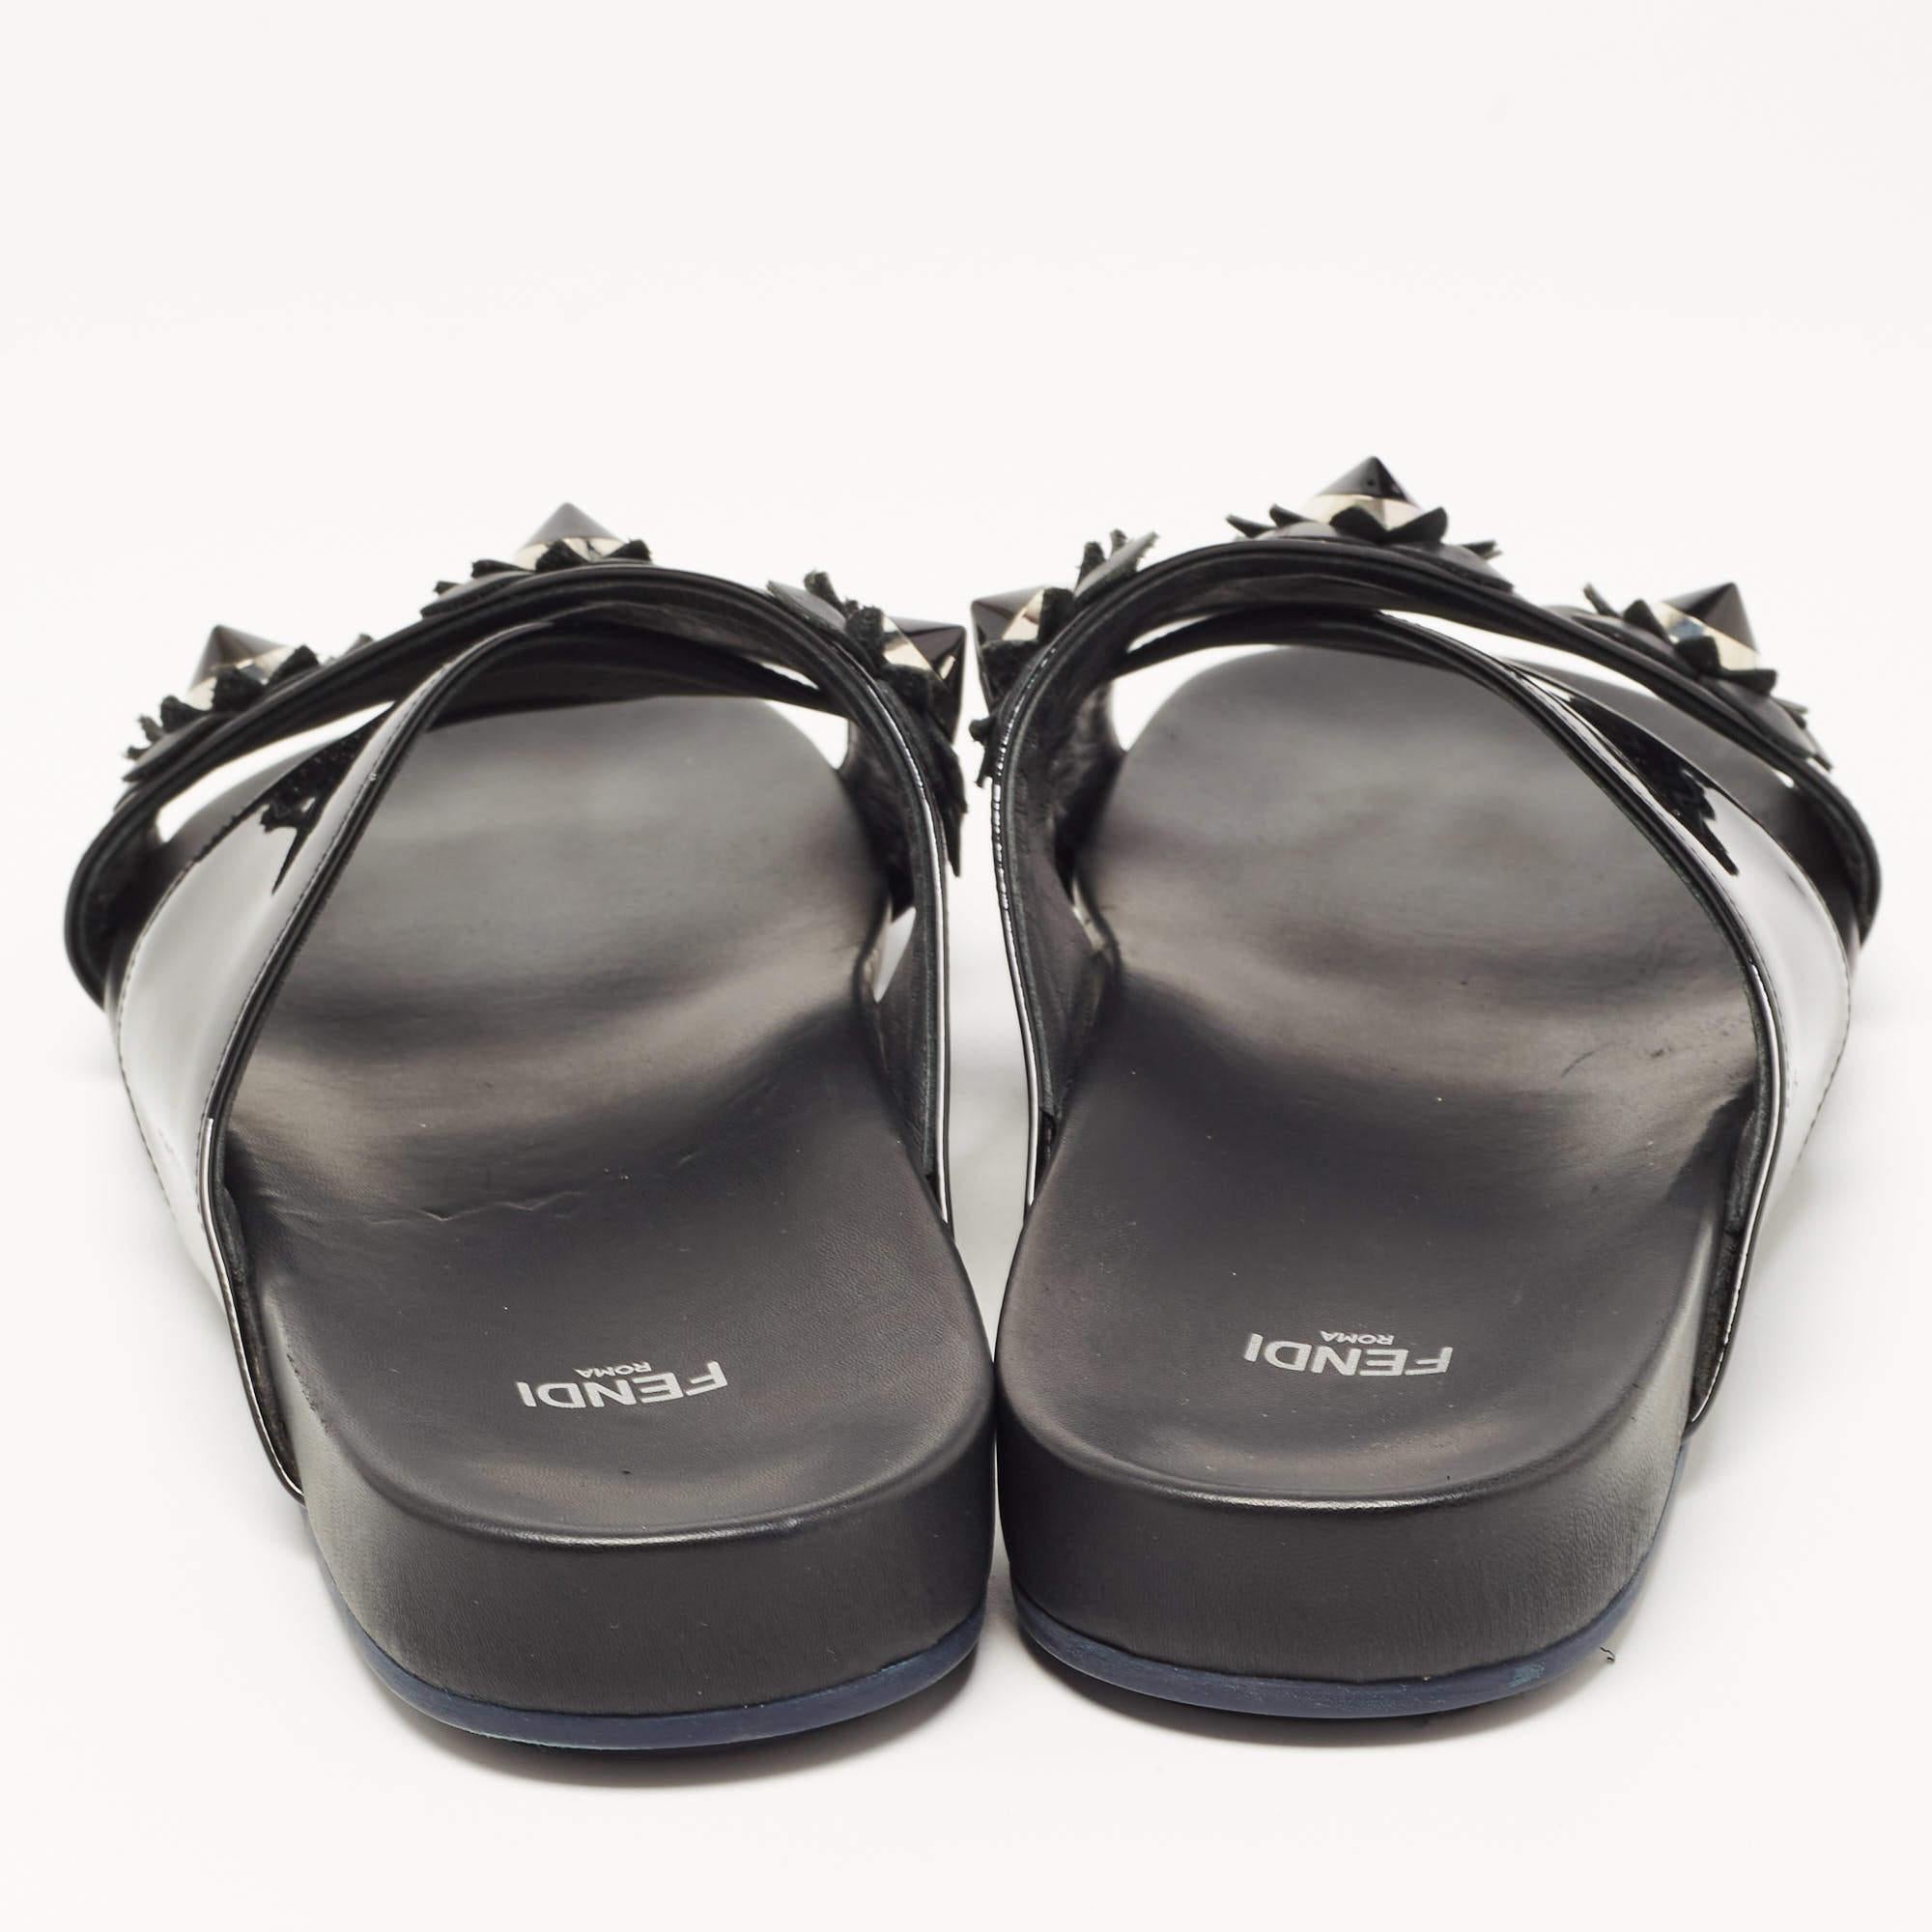 Fendi Black Patent Leather Flowerland Stud Criss Cross Flat Sandals Size 41 3